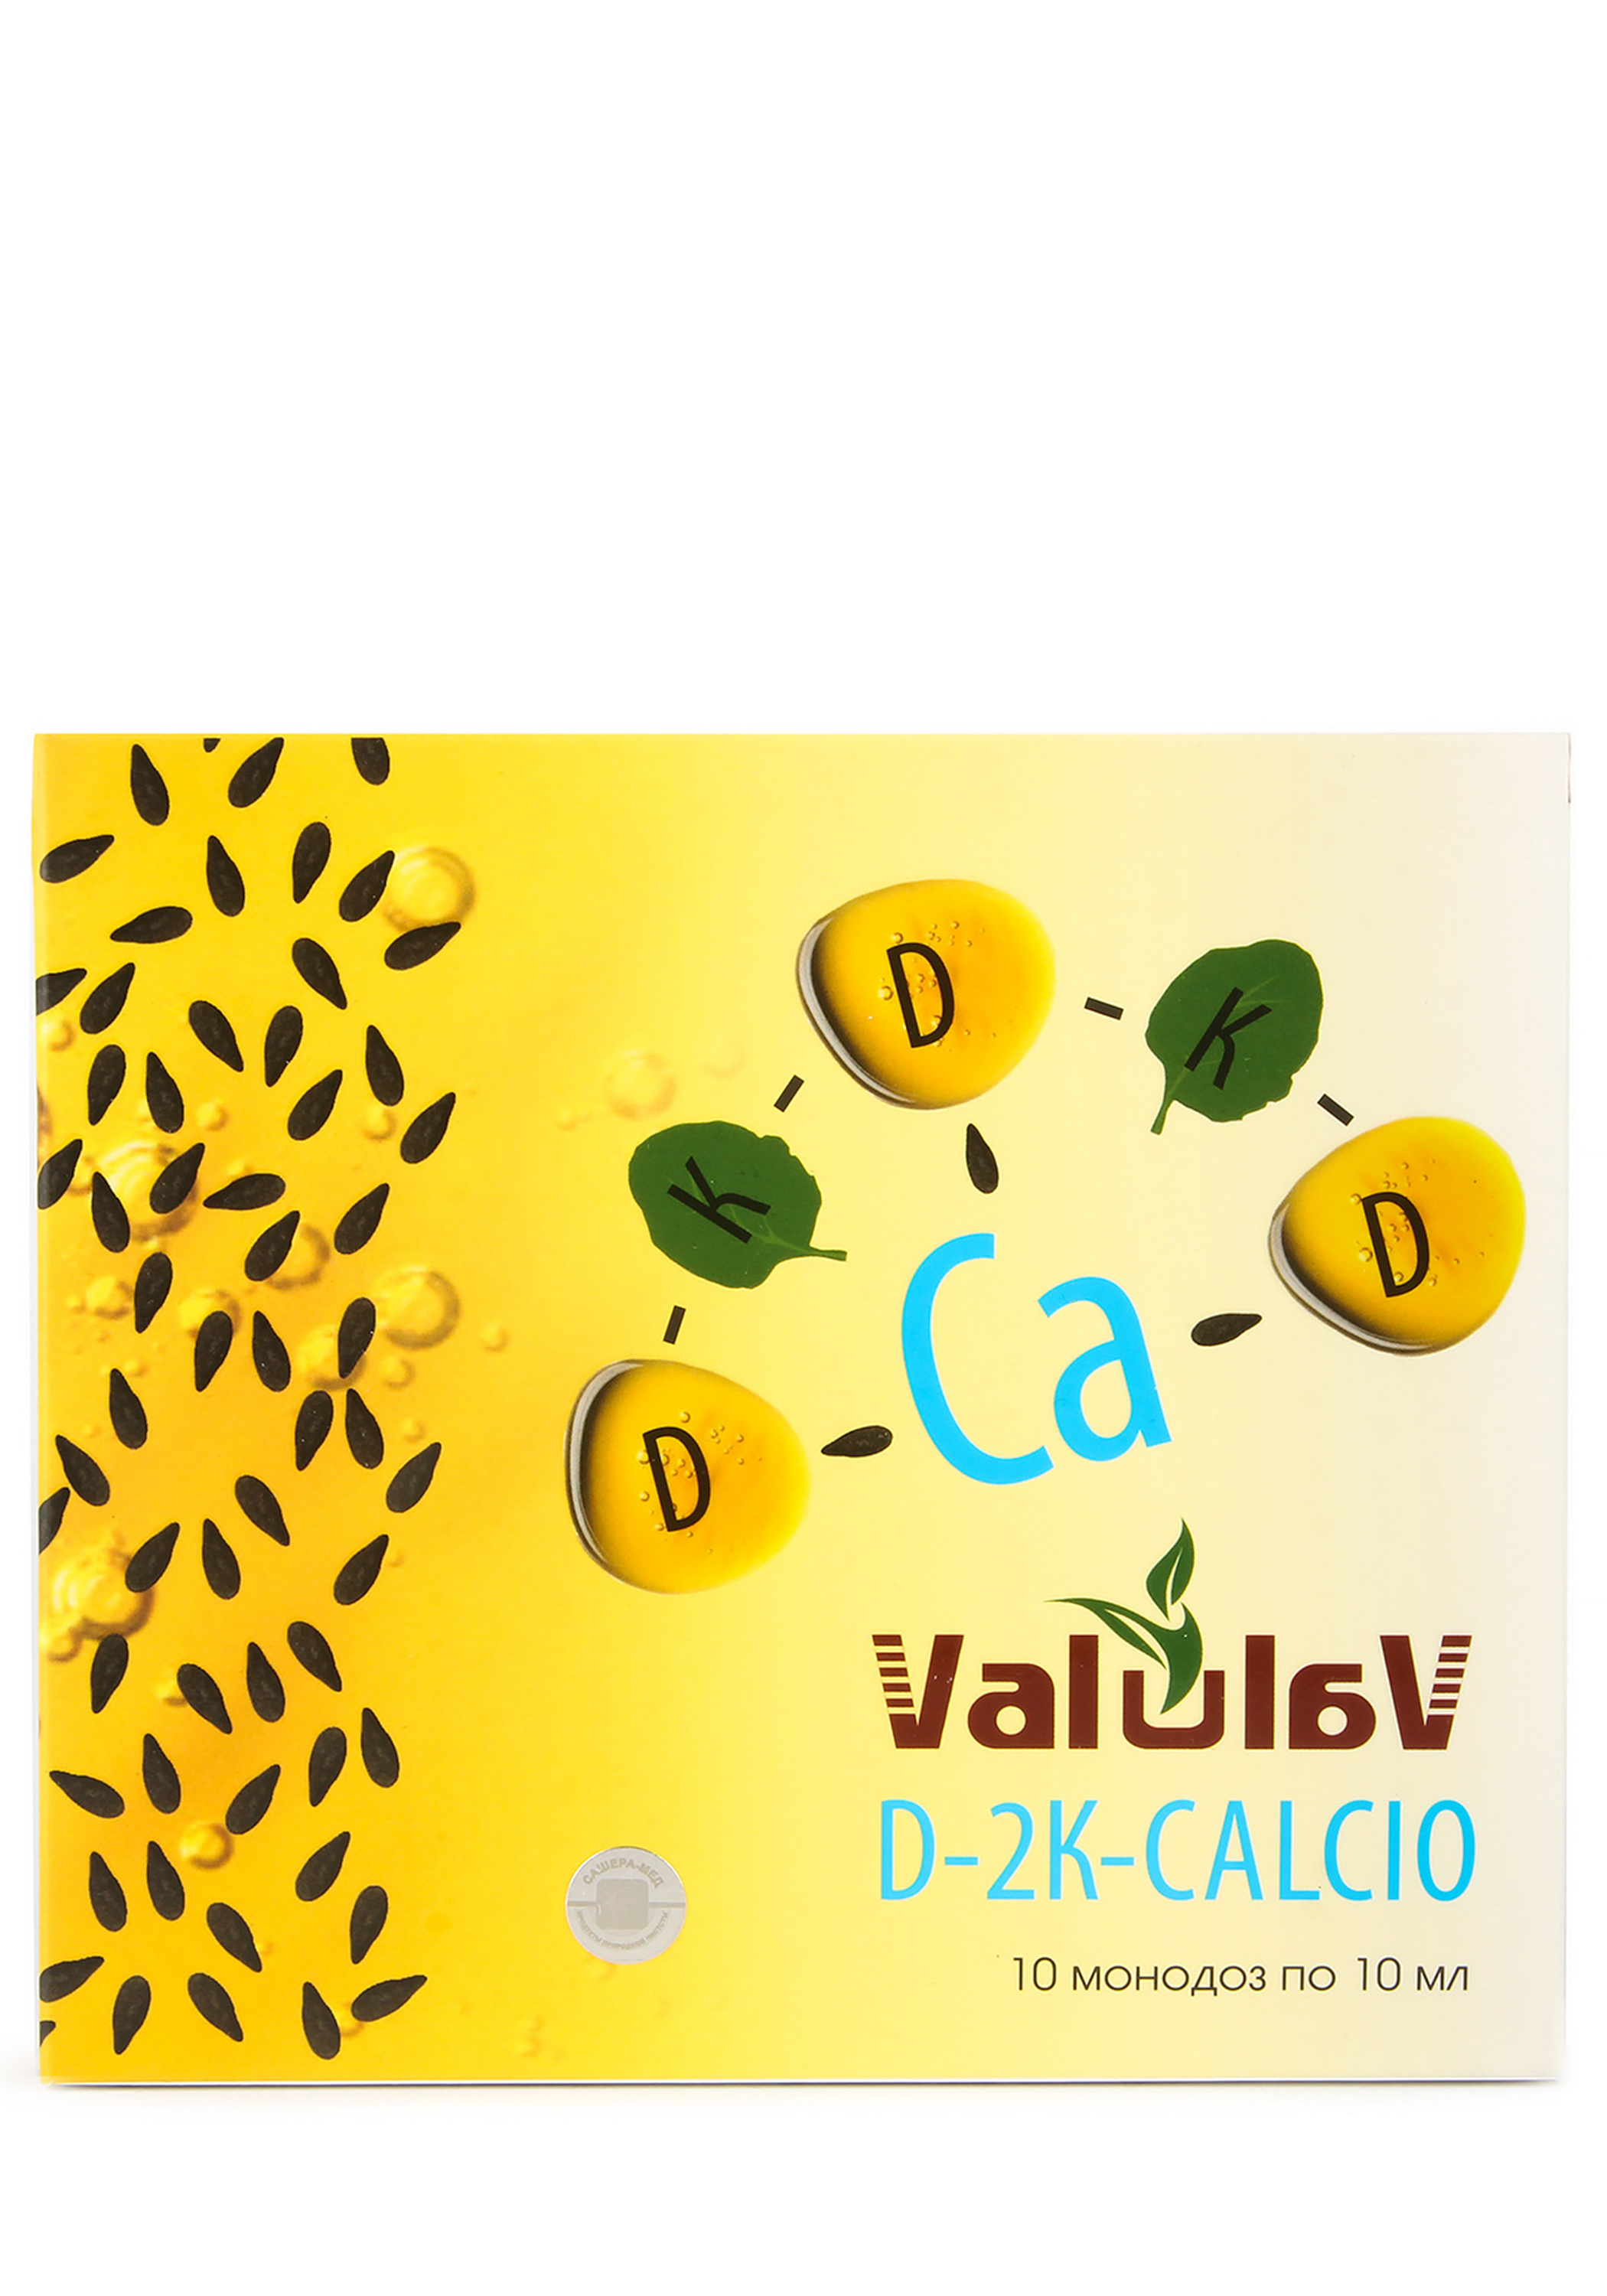 ValulaV D-2K-CALCIO монодозы №10*10 мл Сашера-Мед